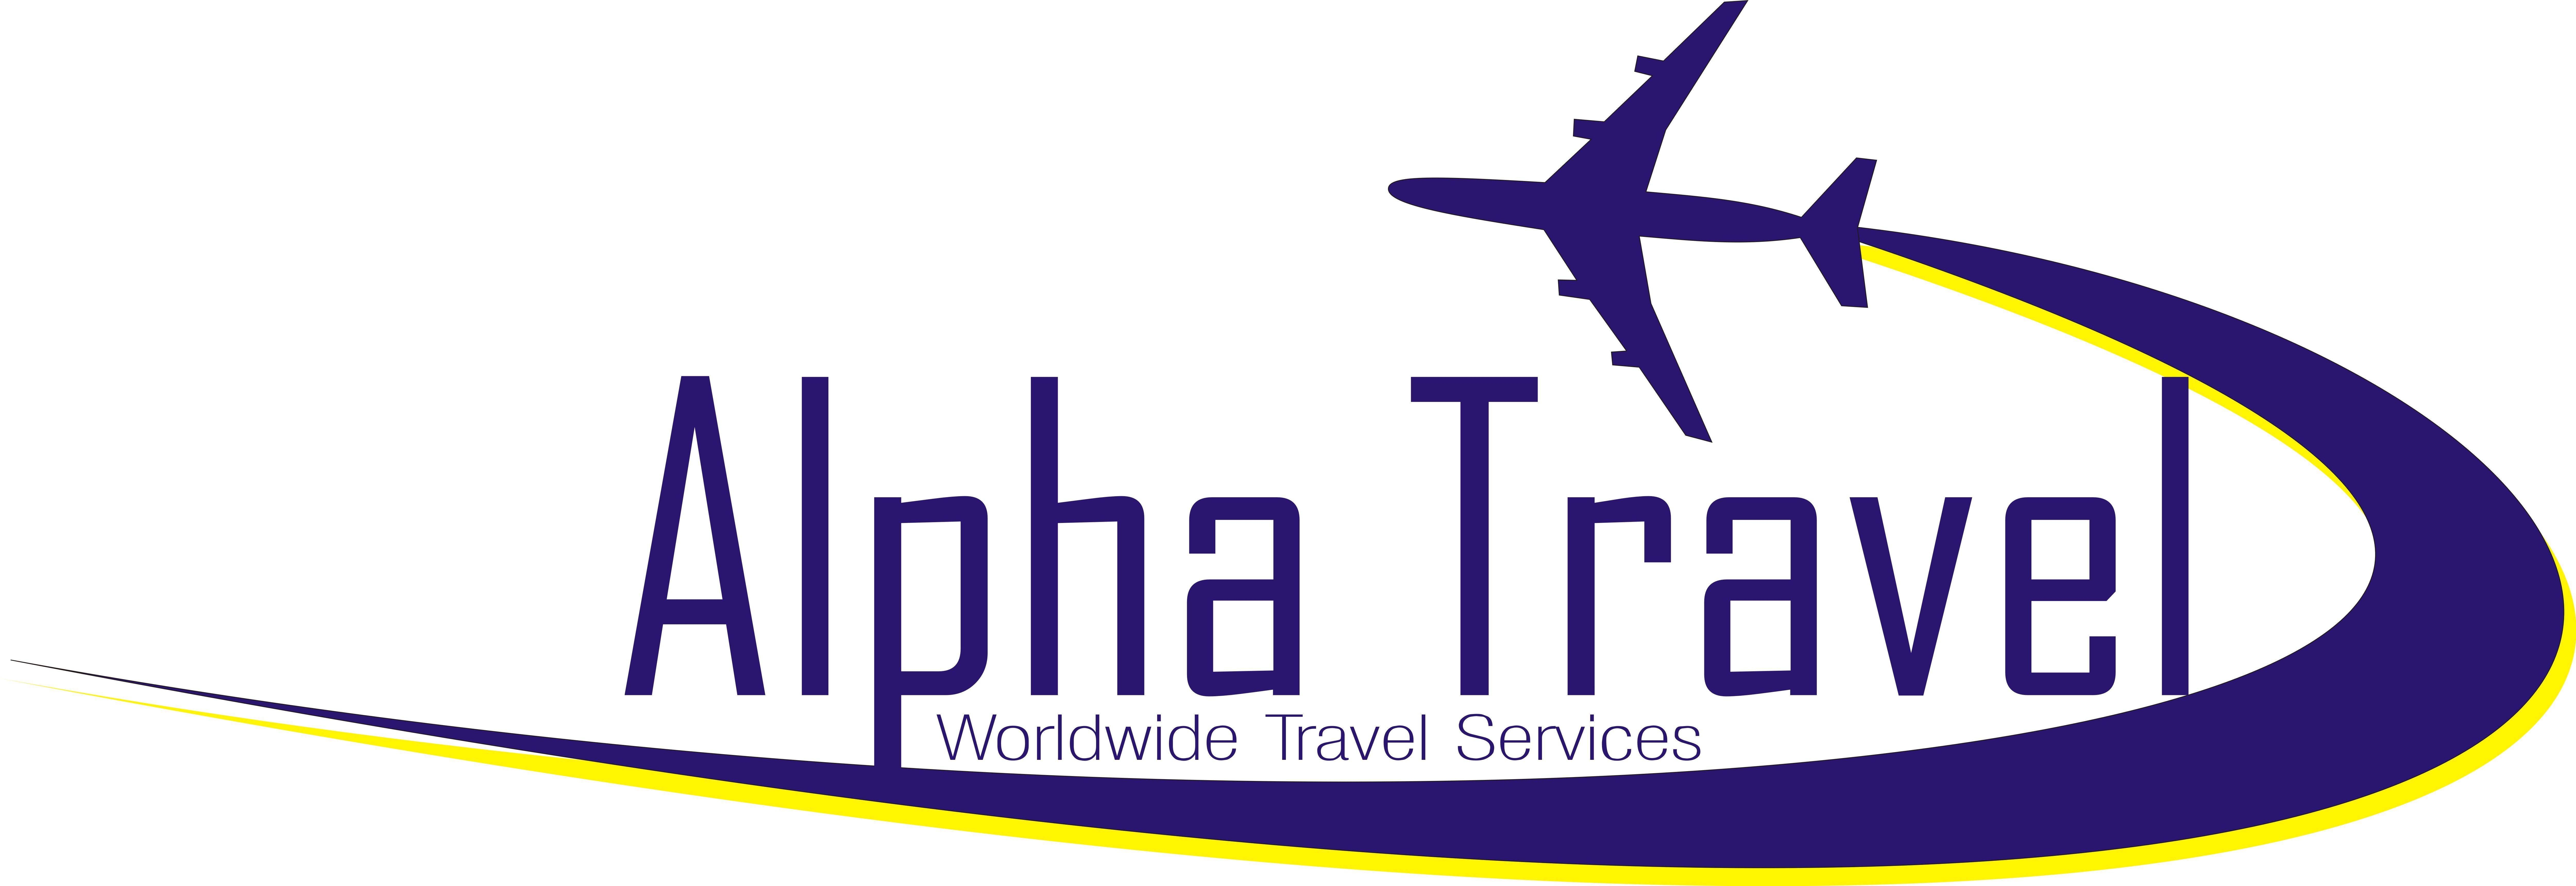 Travel Logo - ALPHA TRAVEL LOGO - Travel-PA